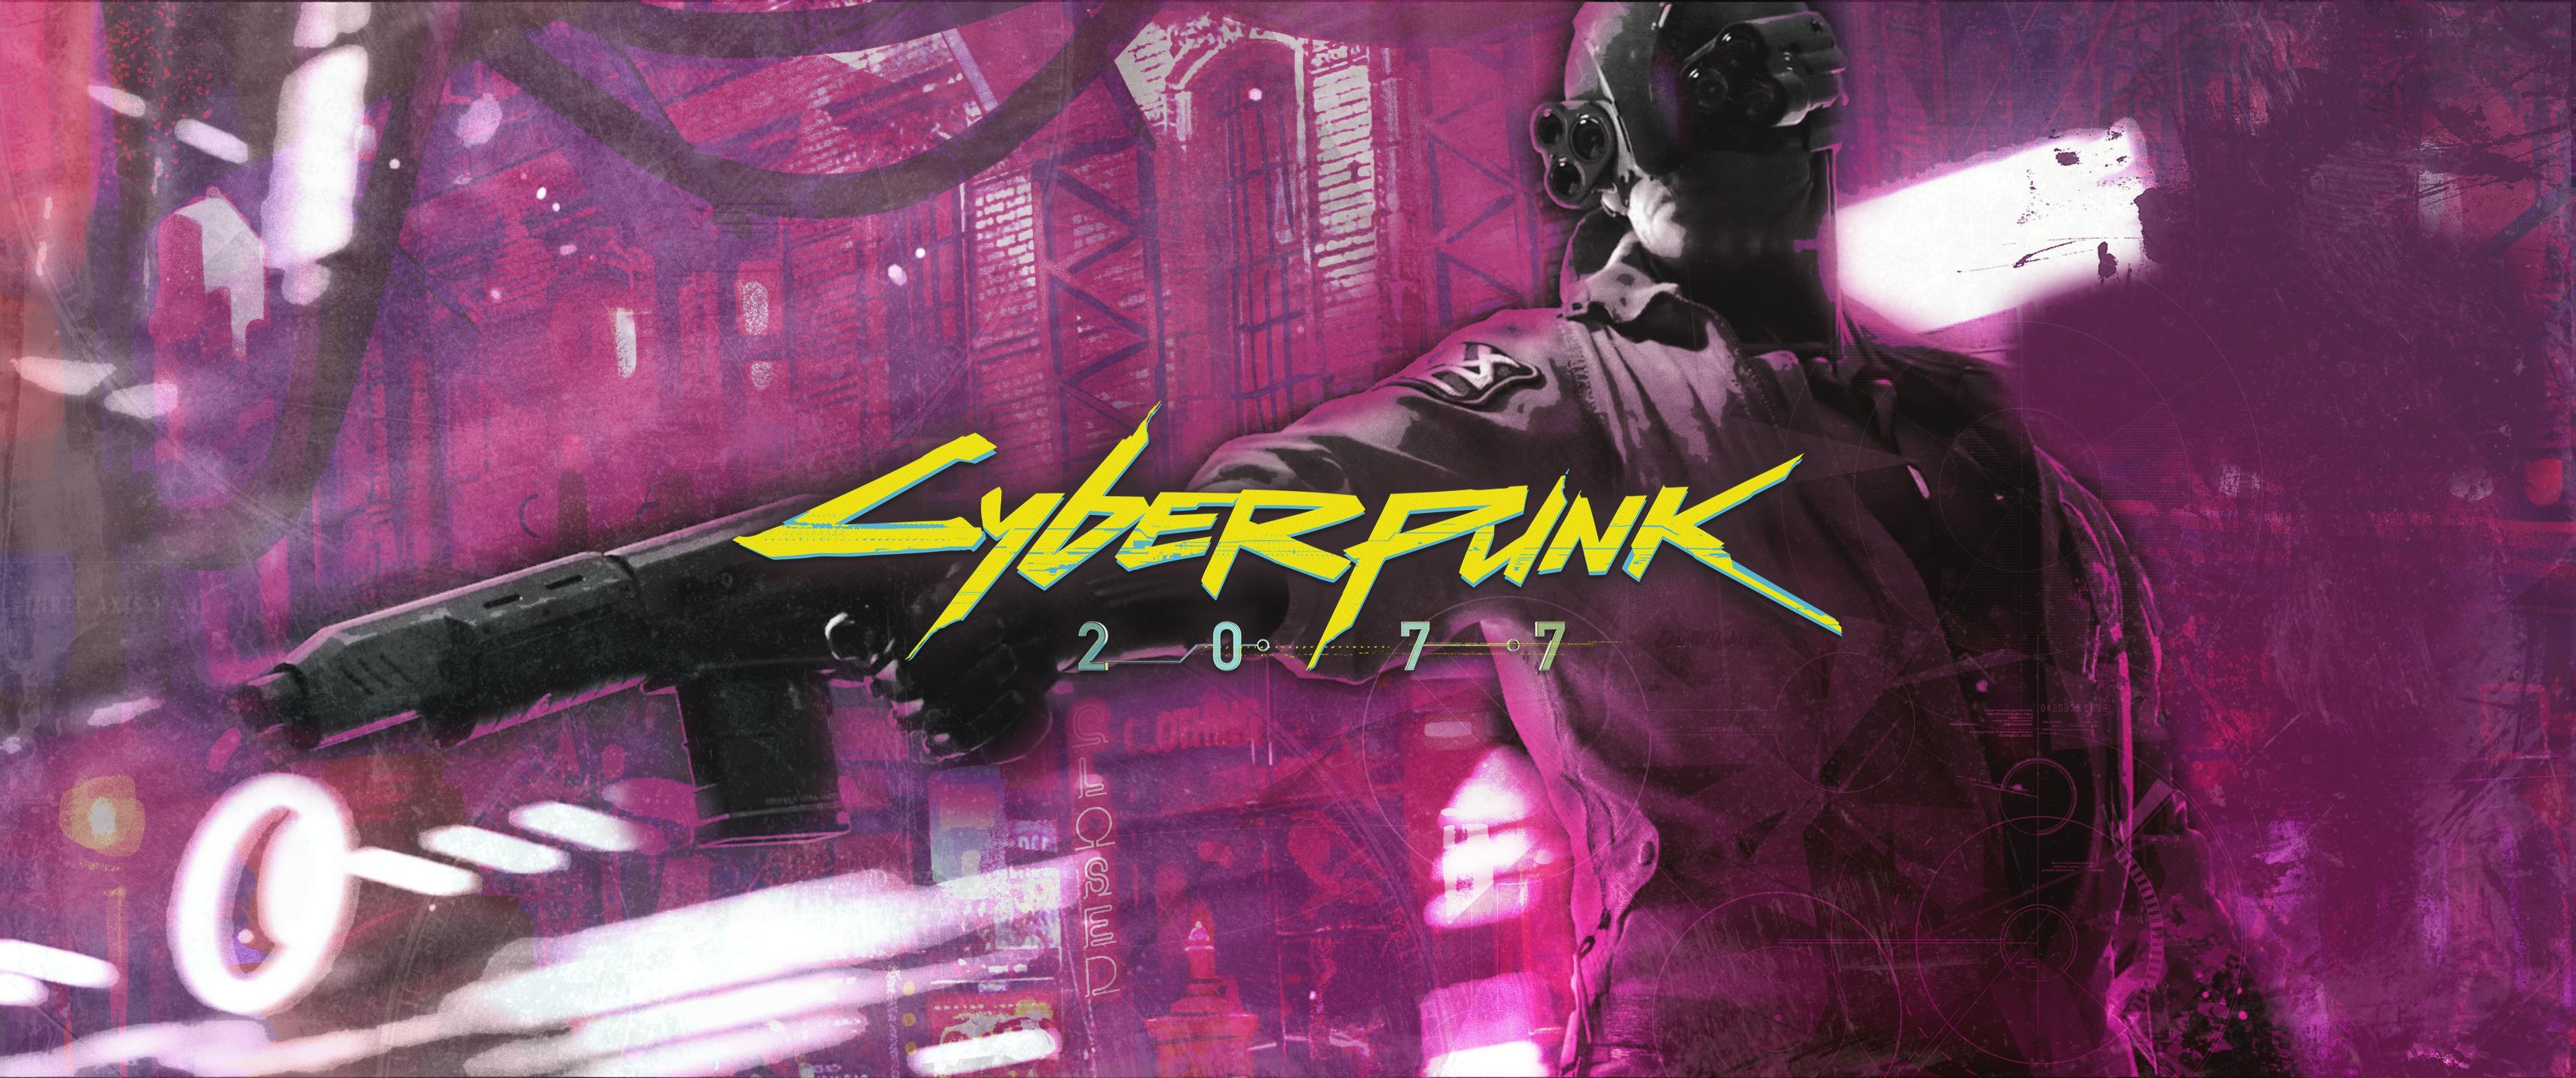 Cyberpunk 2077 Wallpaper #4 4K 21 by 9 3440 x 1440 by DividedFortune on  DeviantArt